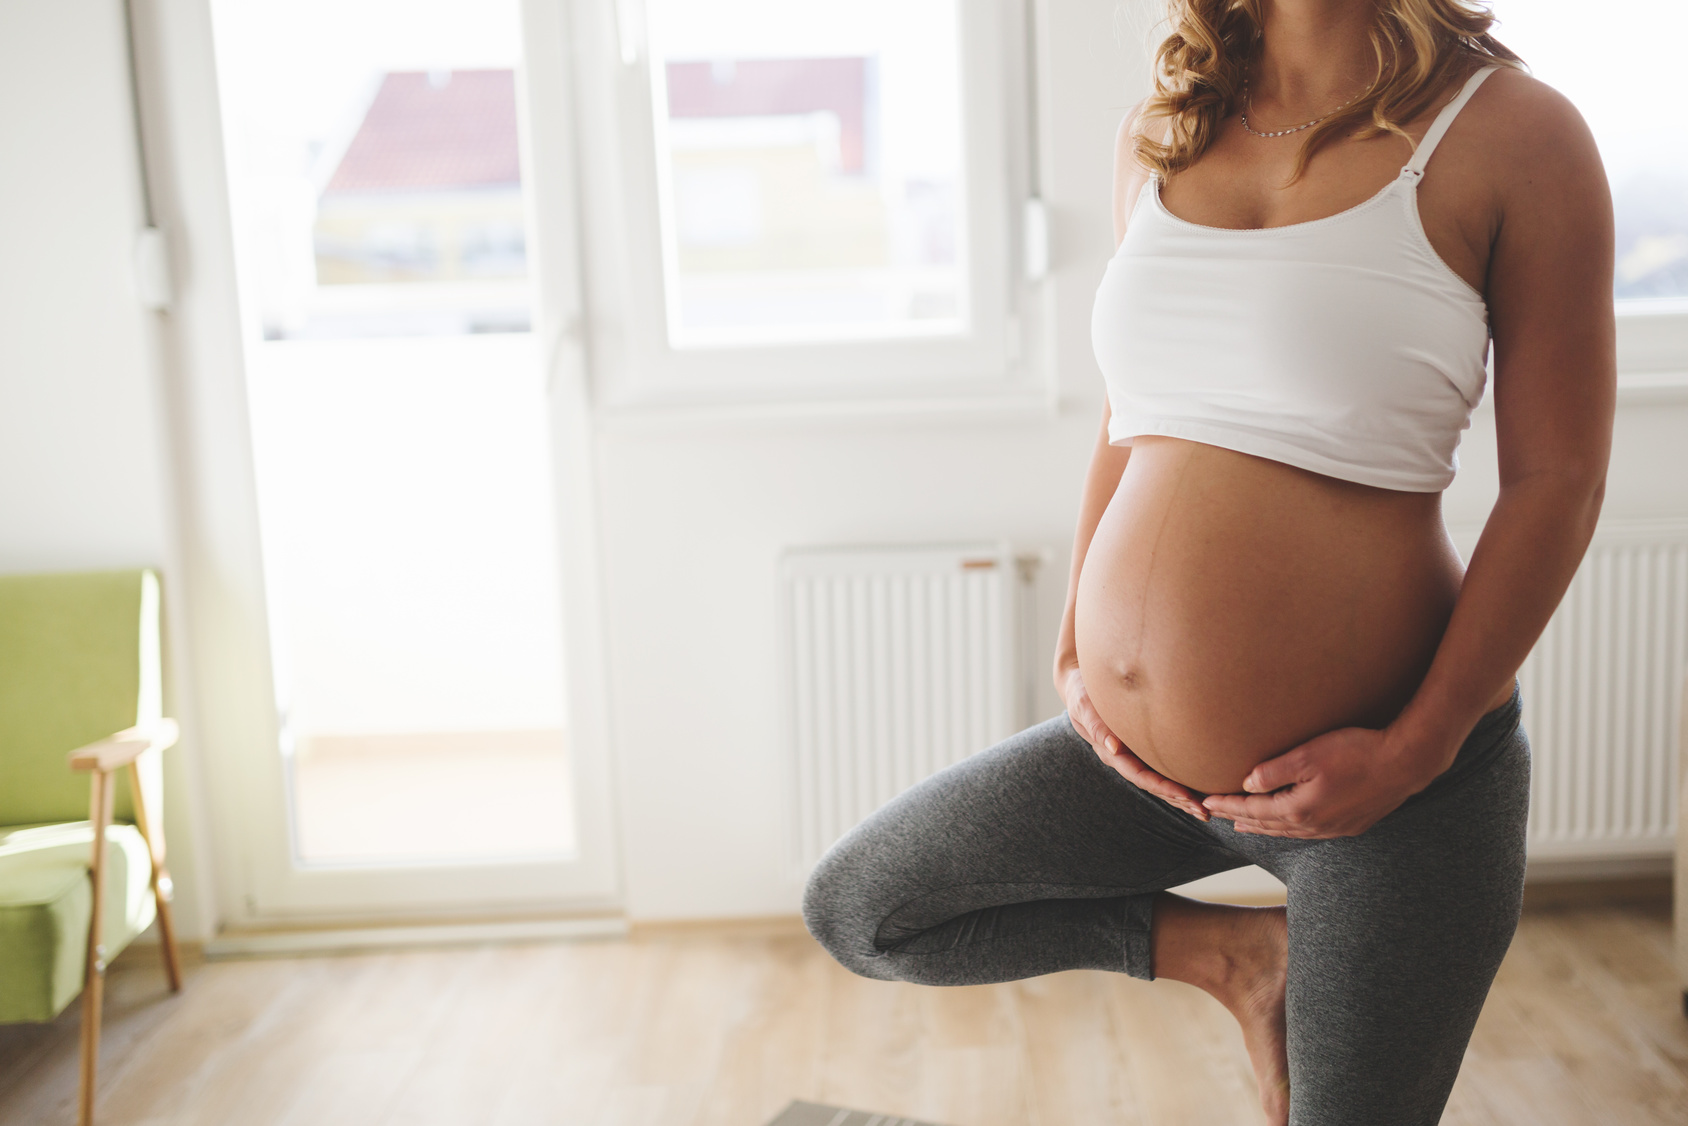 https://urogyn.coloradowomenshealth.com/images/Photo-Urogyn-Pelvic-floor-exercises-during-pregnancy.jpg